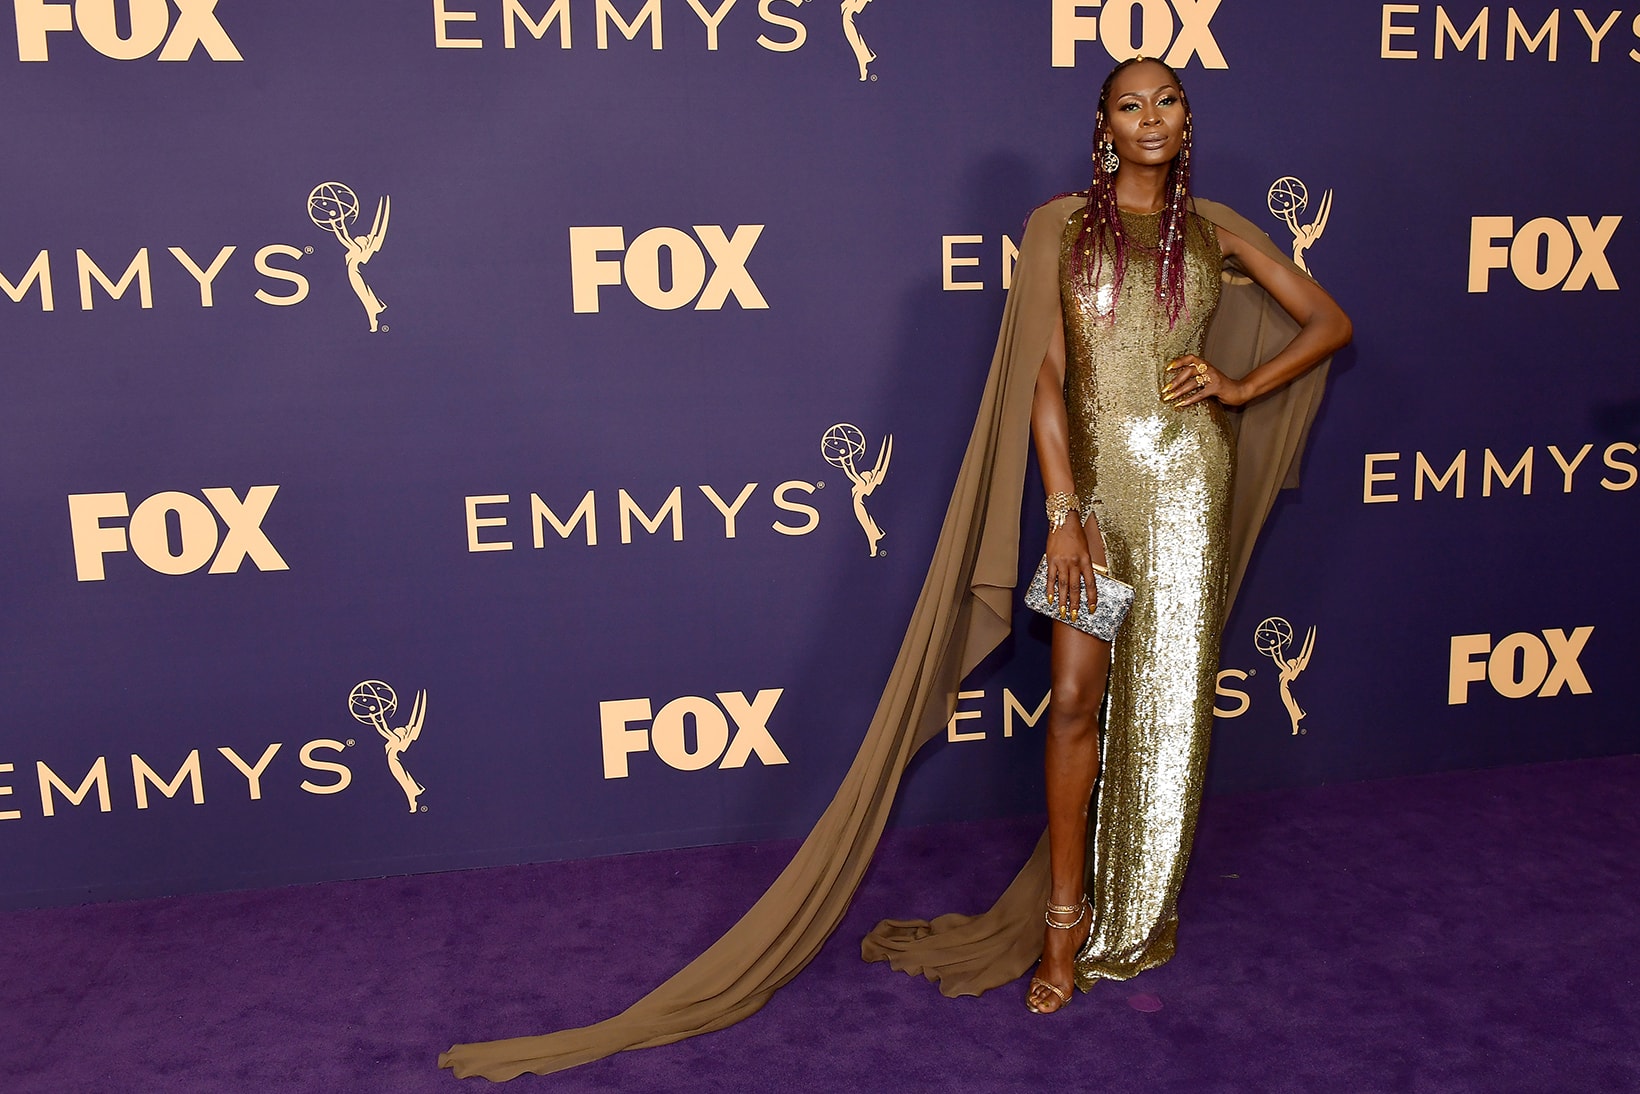 dominique jackson 71 emmy awards jeffrey dodd andrew gelwicks designer celebrity stylist fashion gown gold actress model transgender